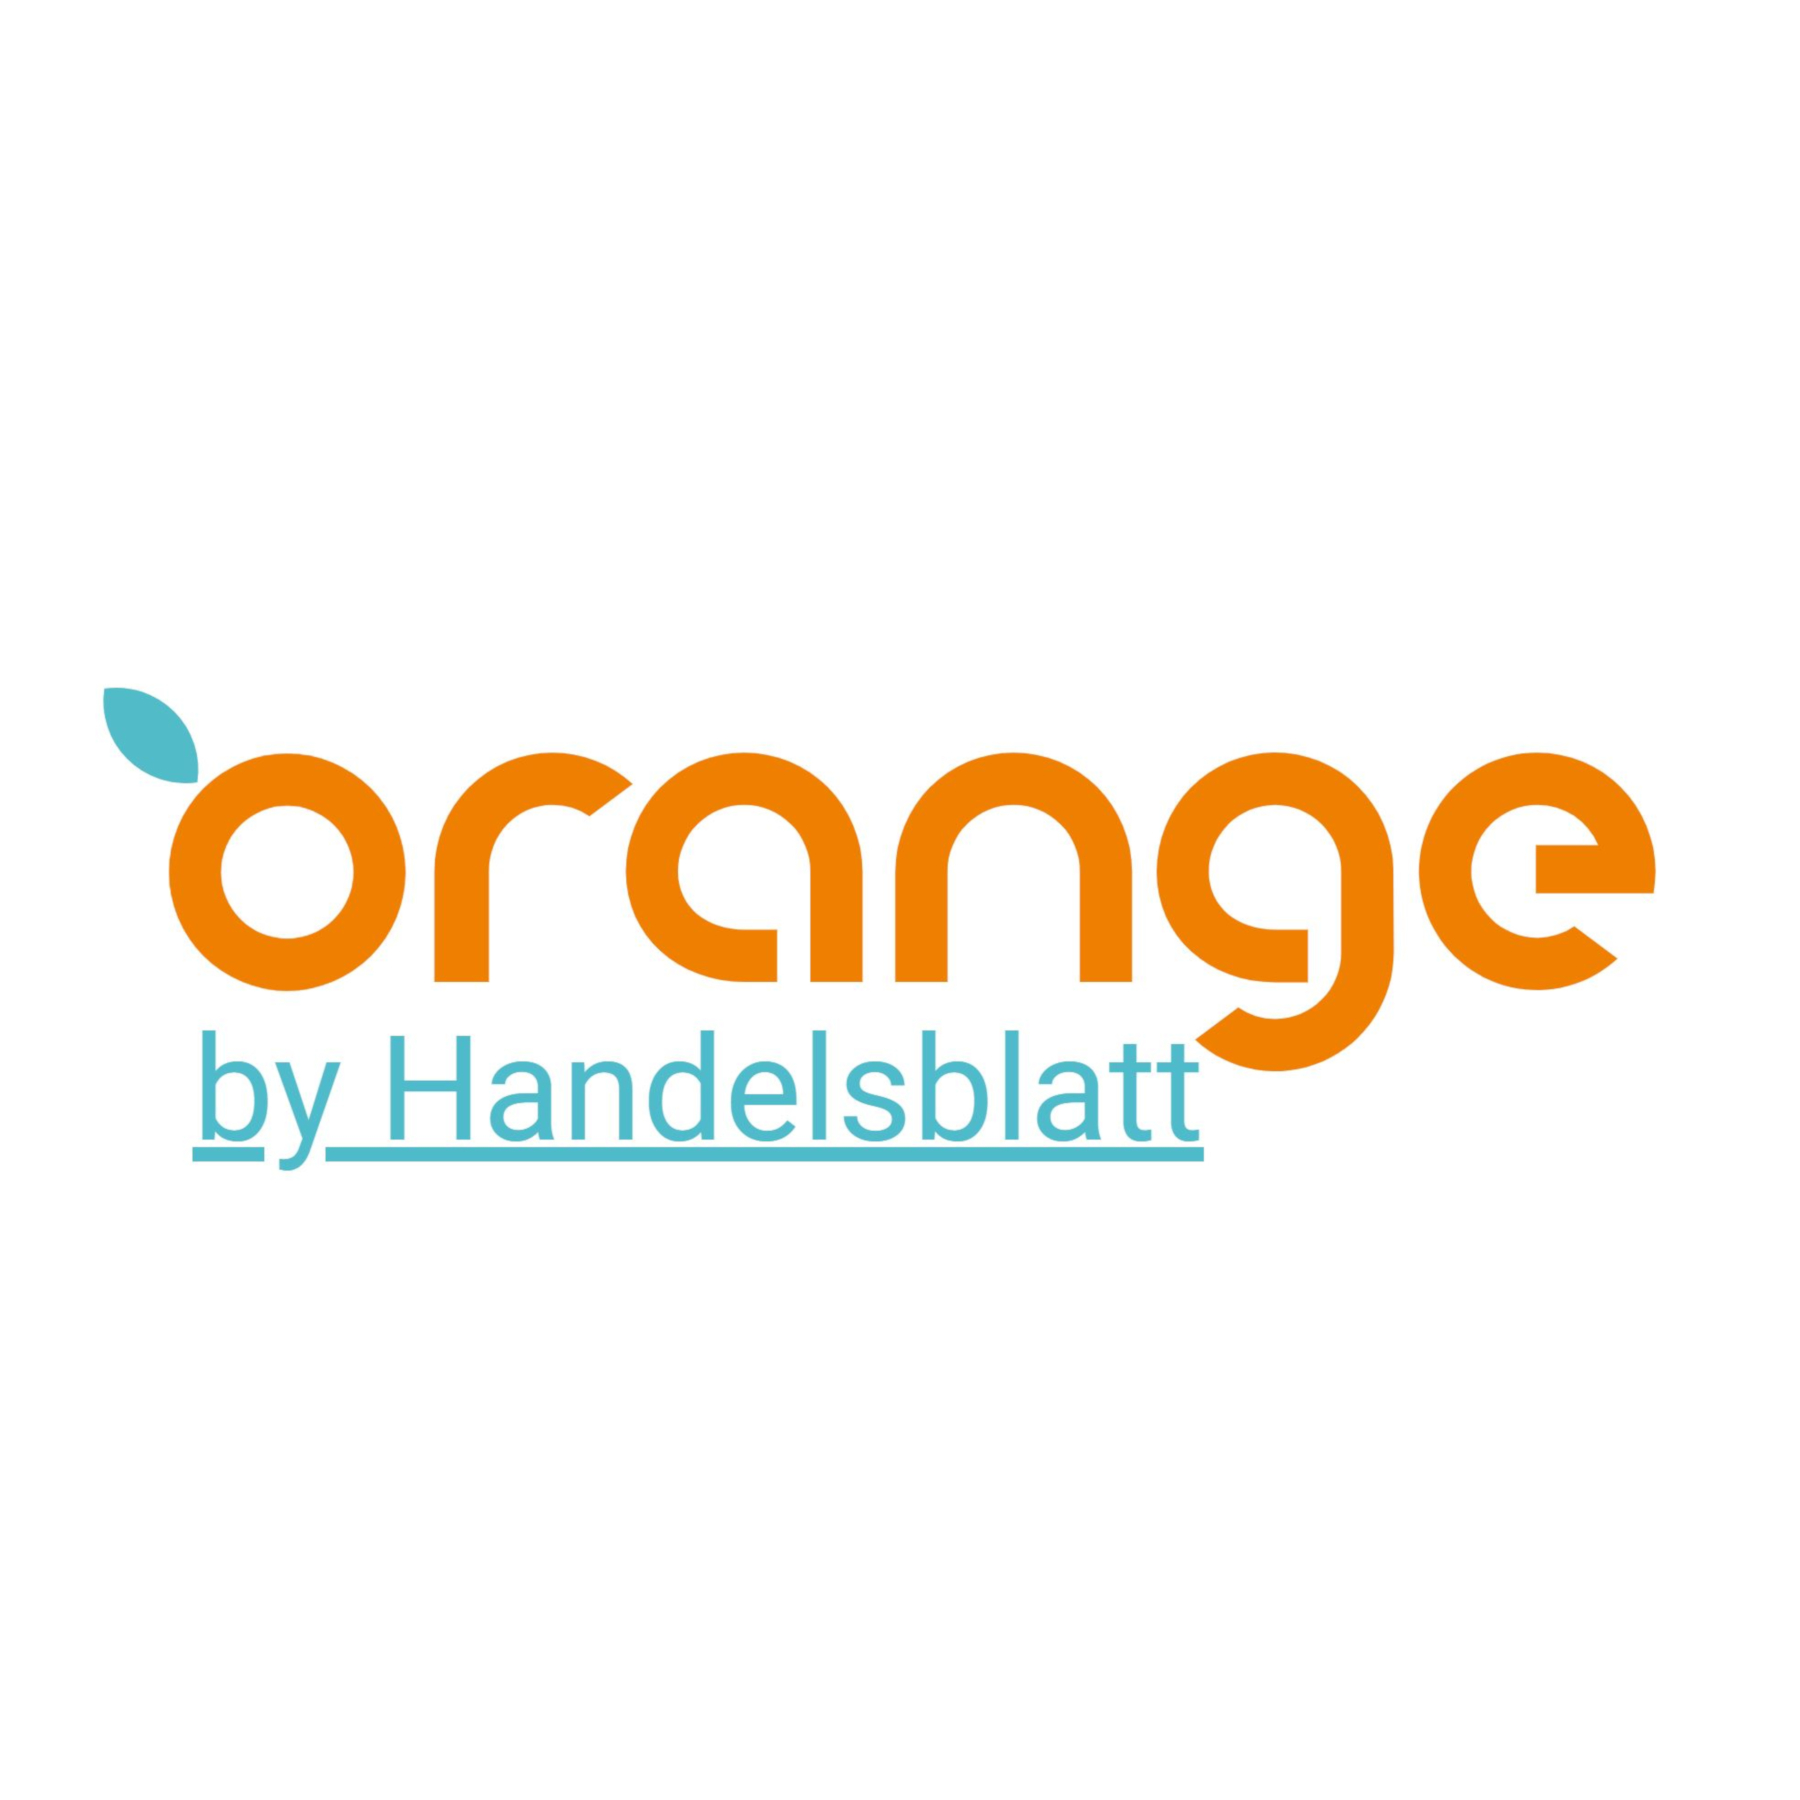 Orange by Handelsblatt Logo